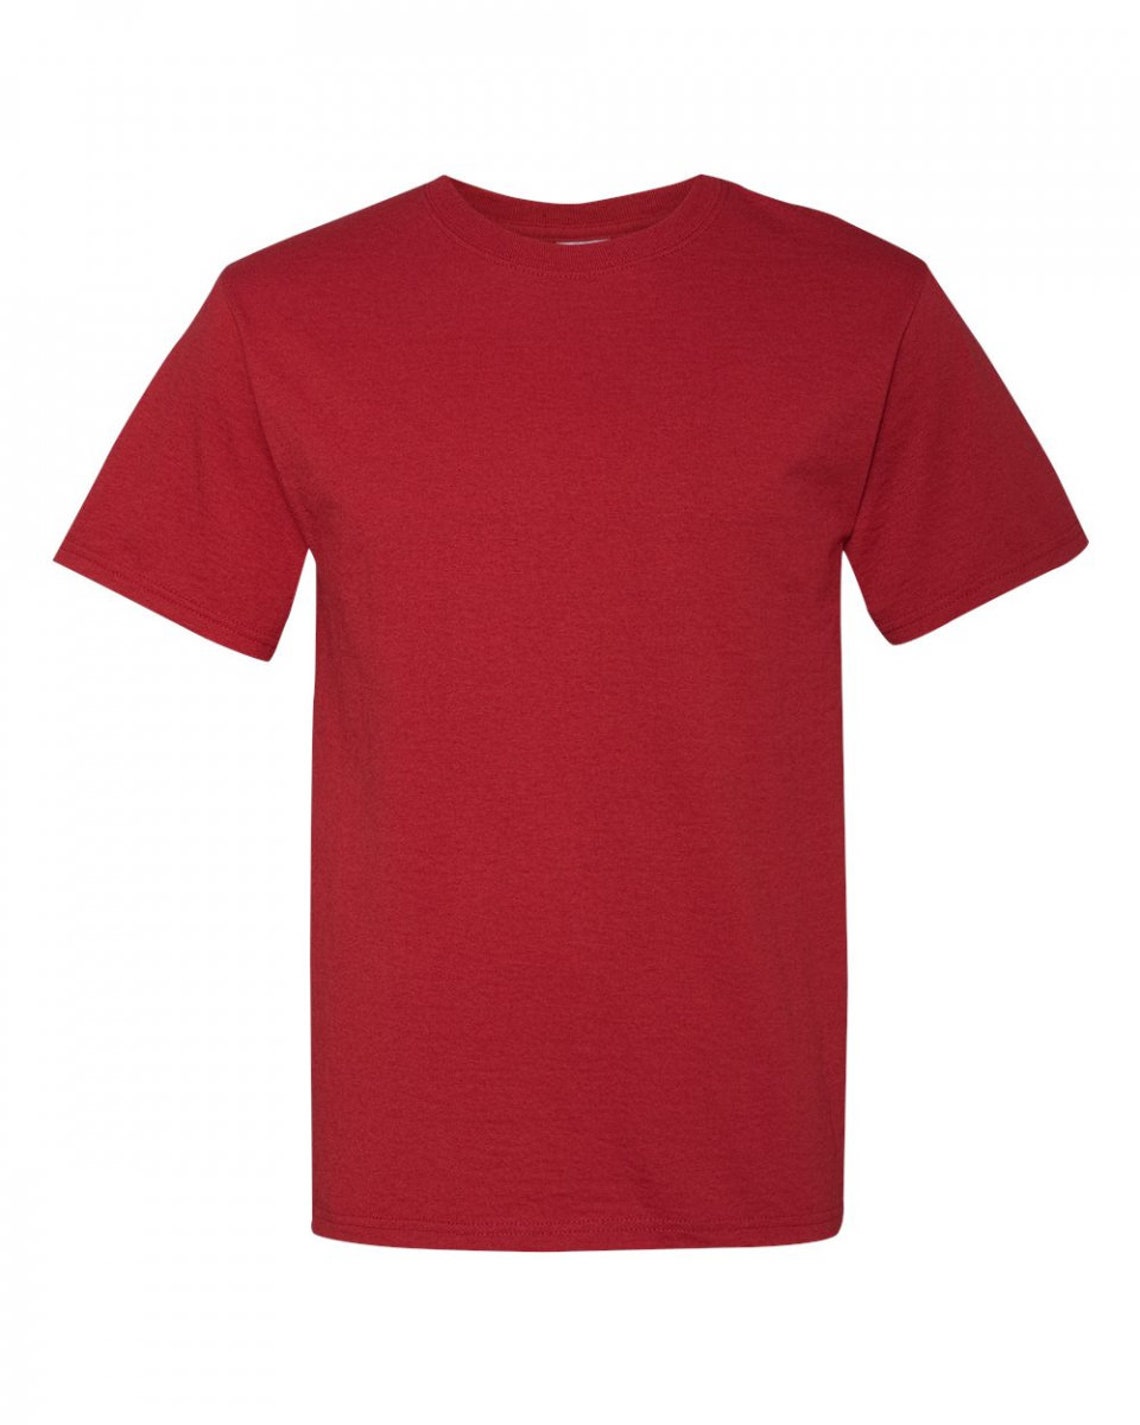 Blank Tshirts Wholesale Blank Shirts T-shirts Blanks | Etsy